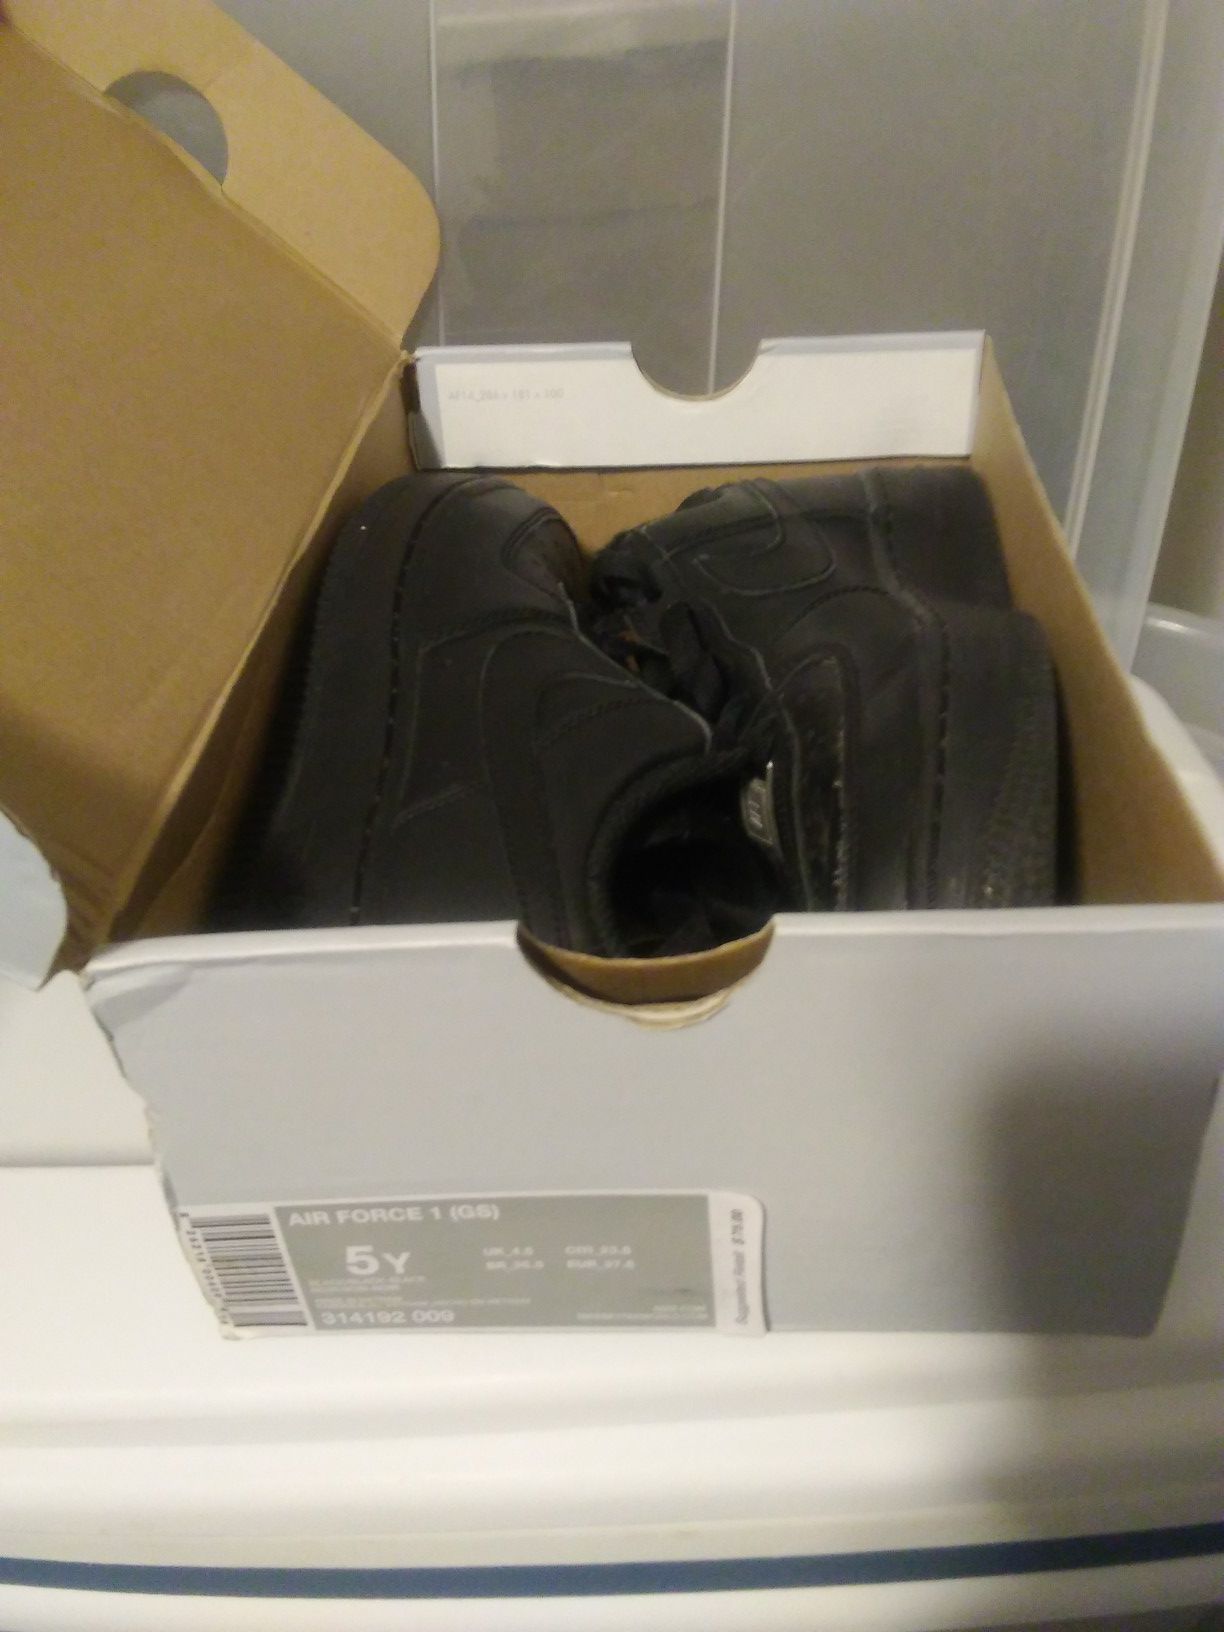 Sneakers, Jordans, Timberland boots